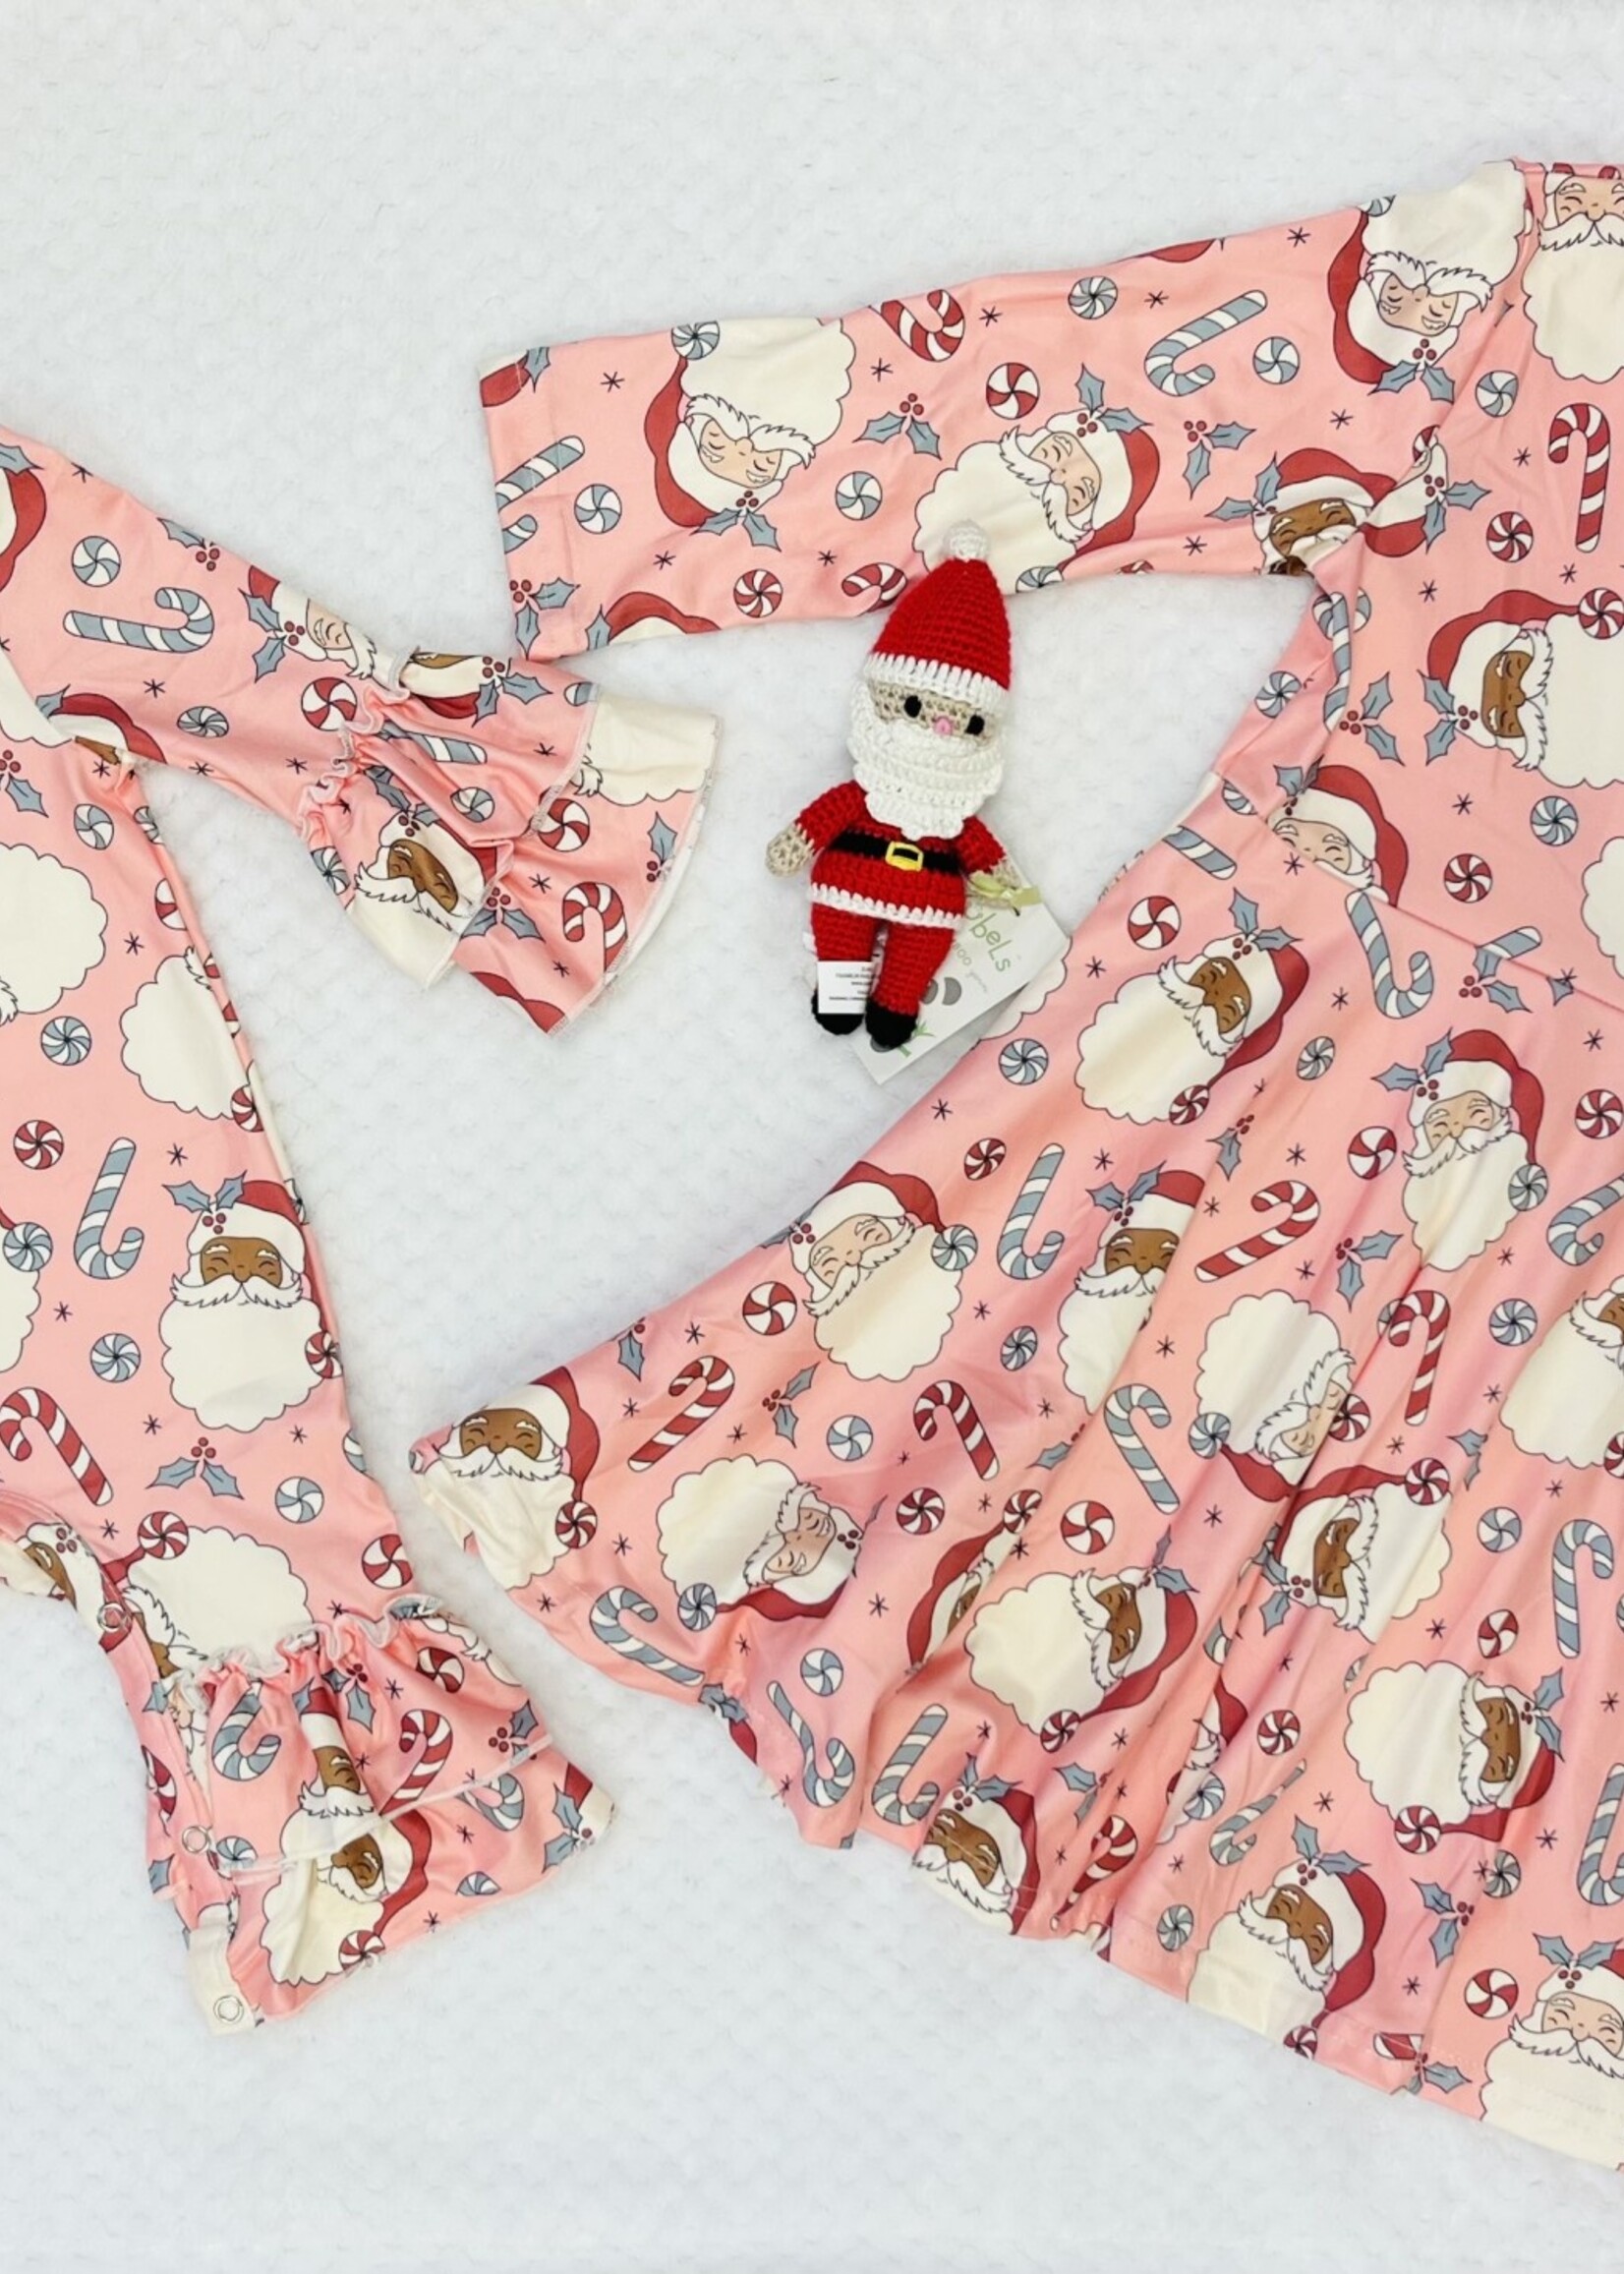 Clover Cottage Lt. Pink Santa Faces w/Candy Canes Prints Dress